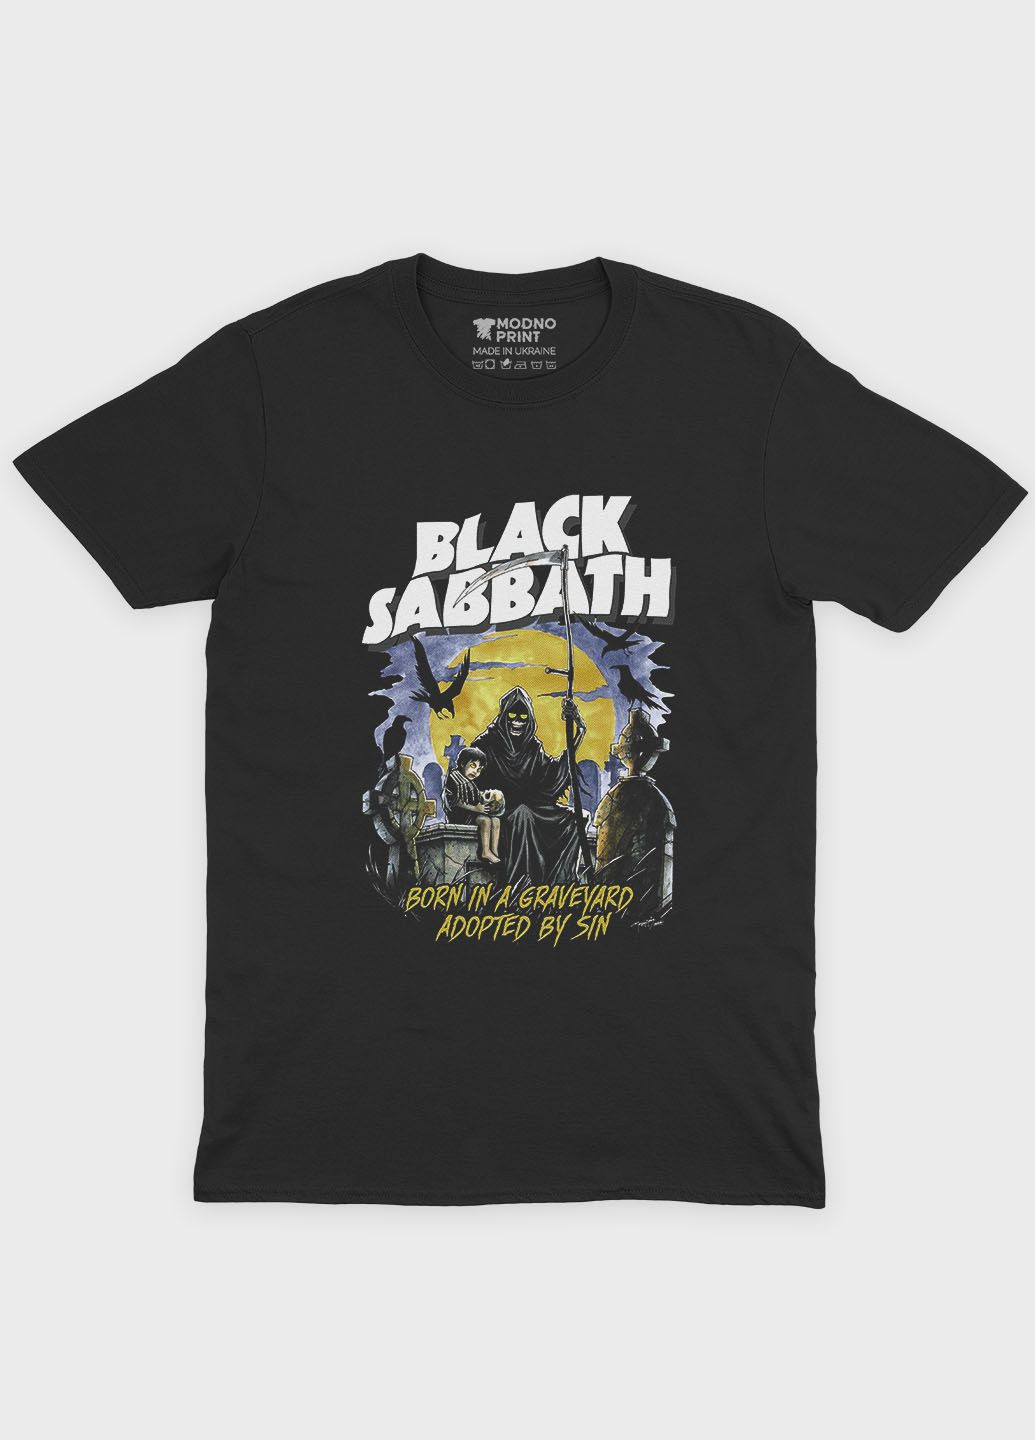 Мужская футболка с рок принтом "Black abbath" S (TS001-1-BL-004-2-107-F) Modno - (290116557)